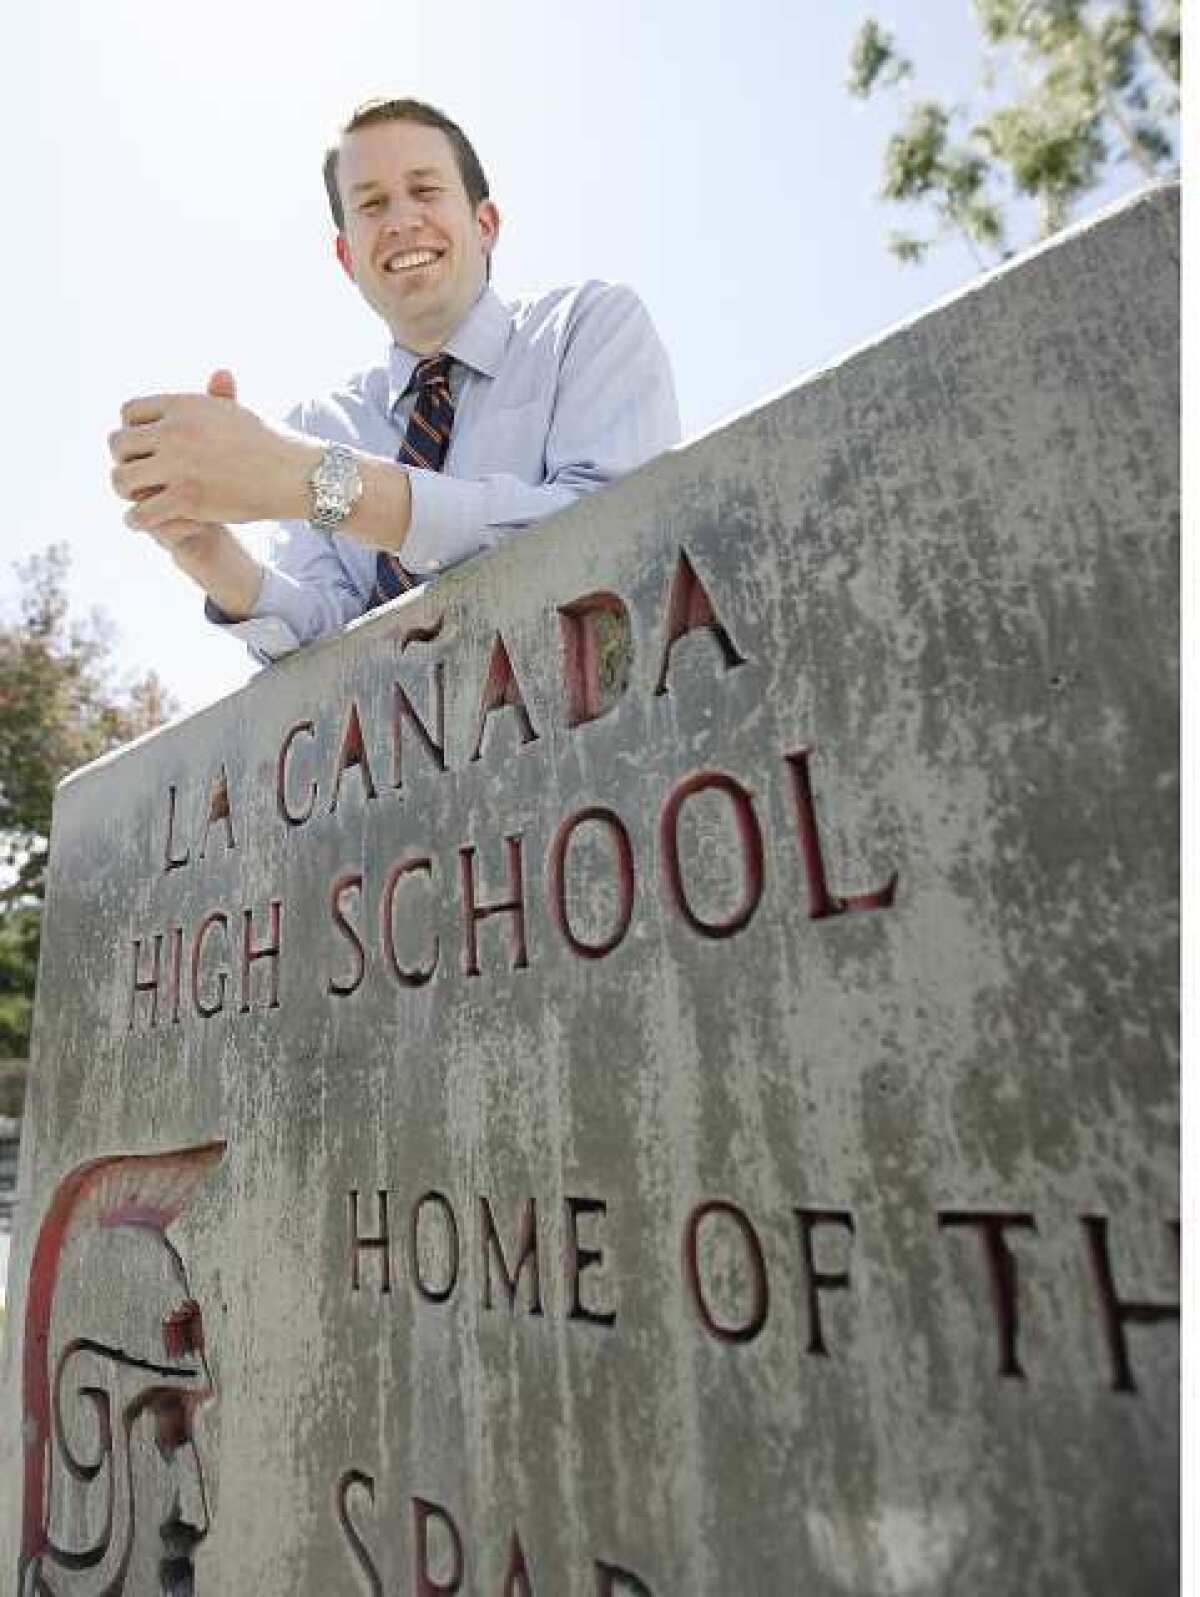 New La Canada High School Principal Ian McFeat.